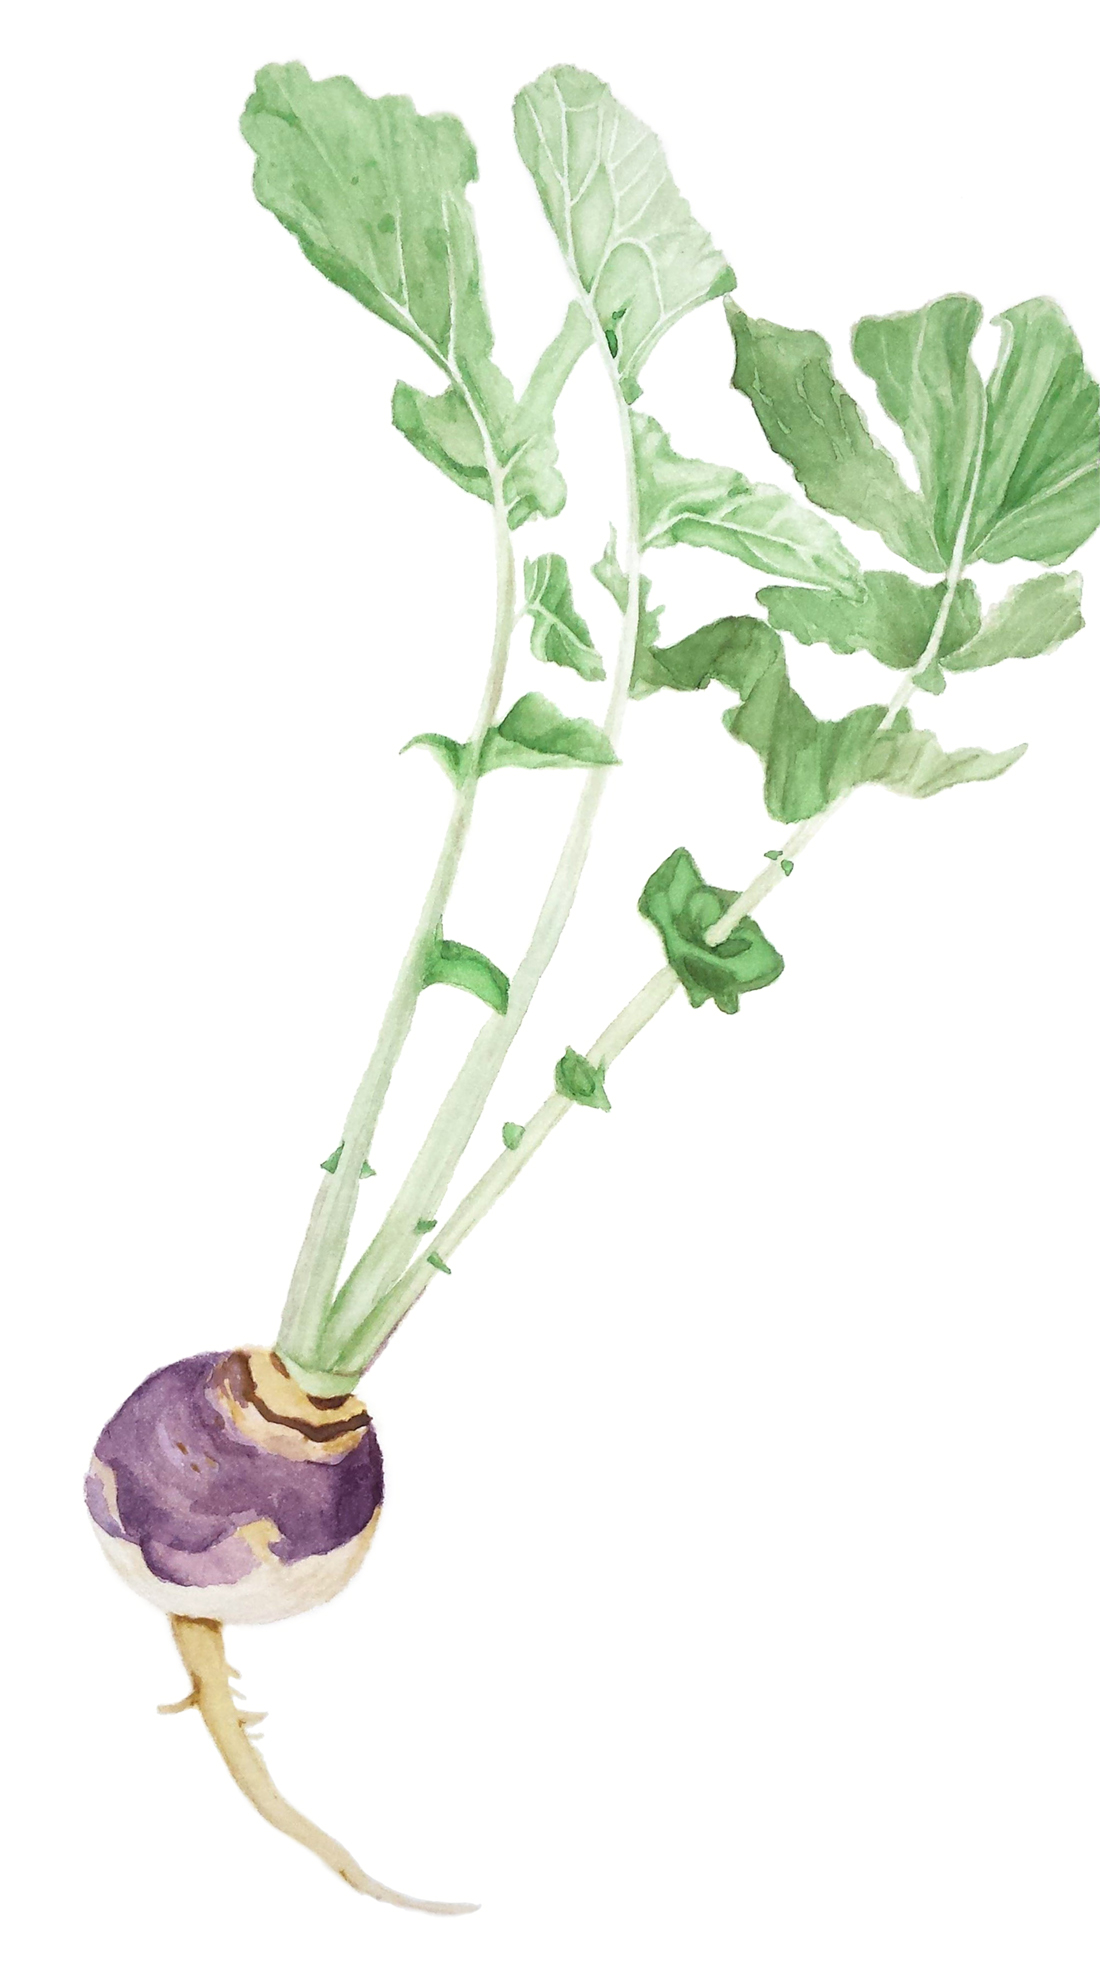 Turnip botanical illustration 2016 09 29 bg clear